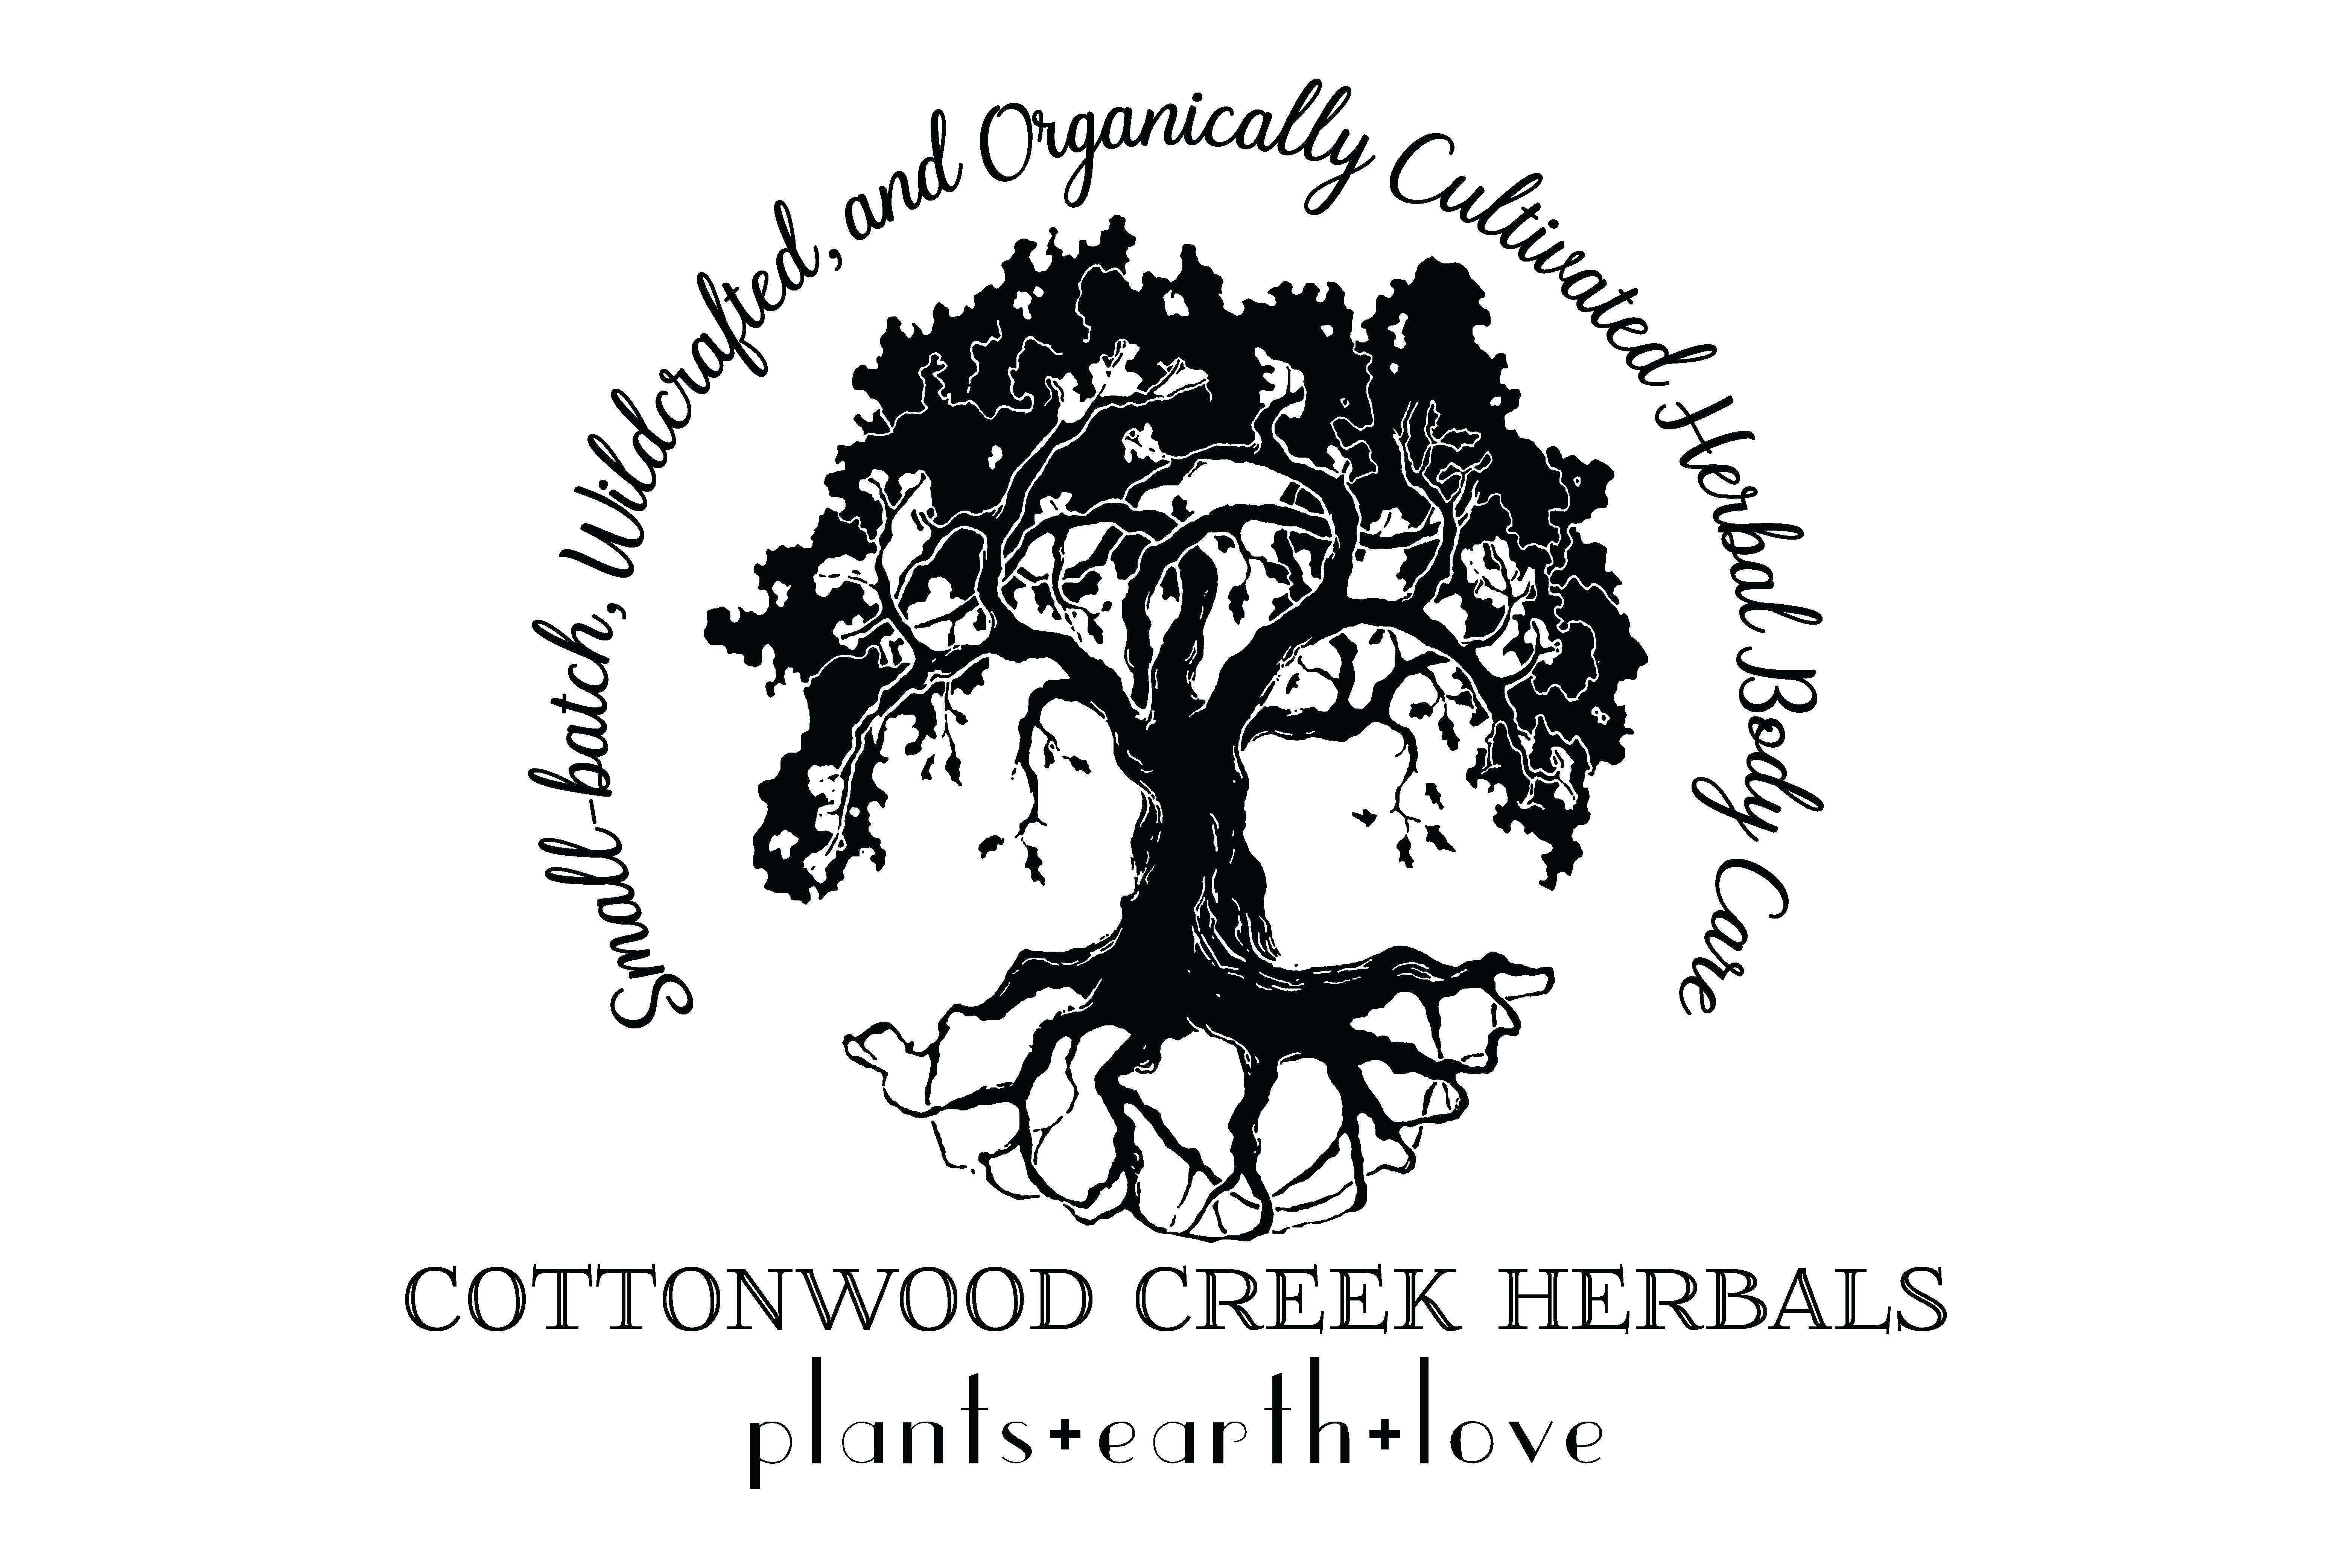 Cottonwood Creek Herbals